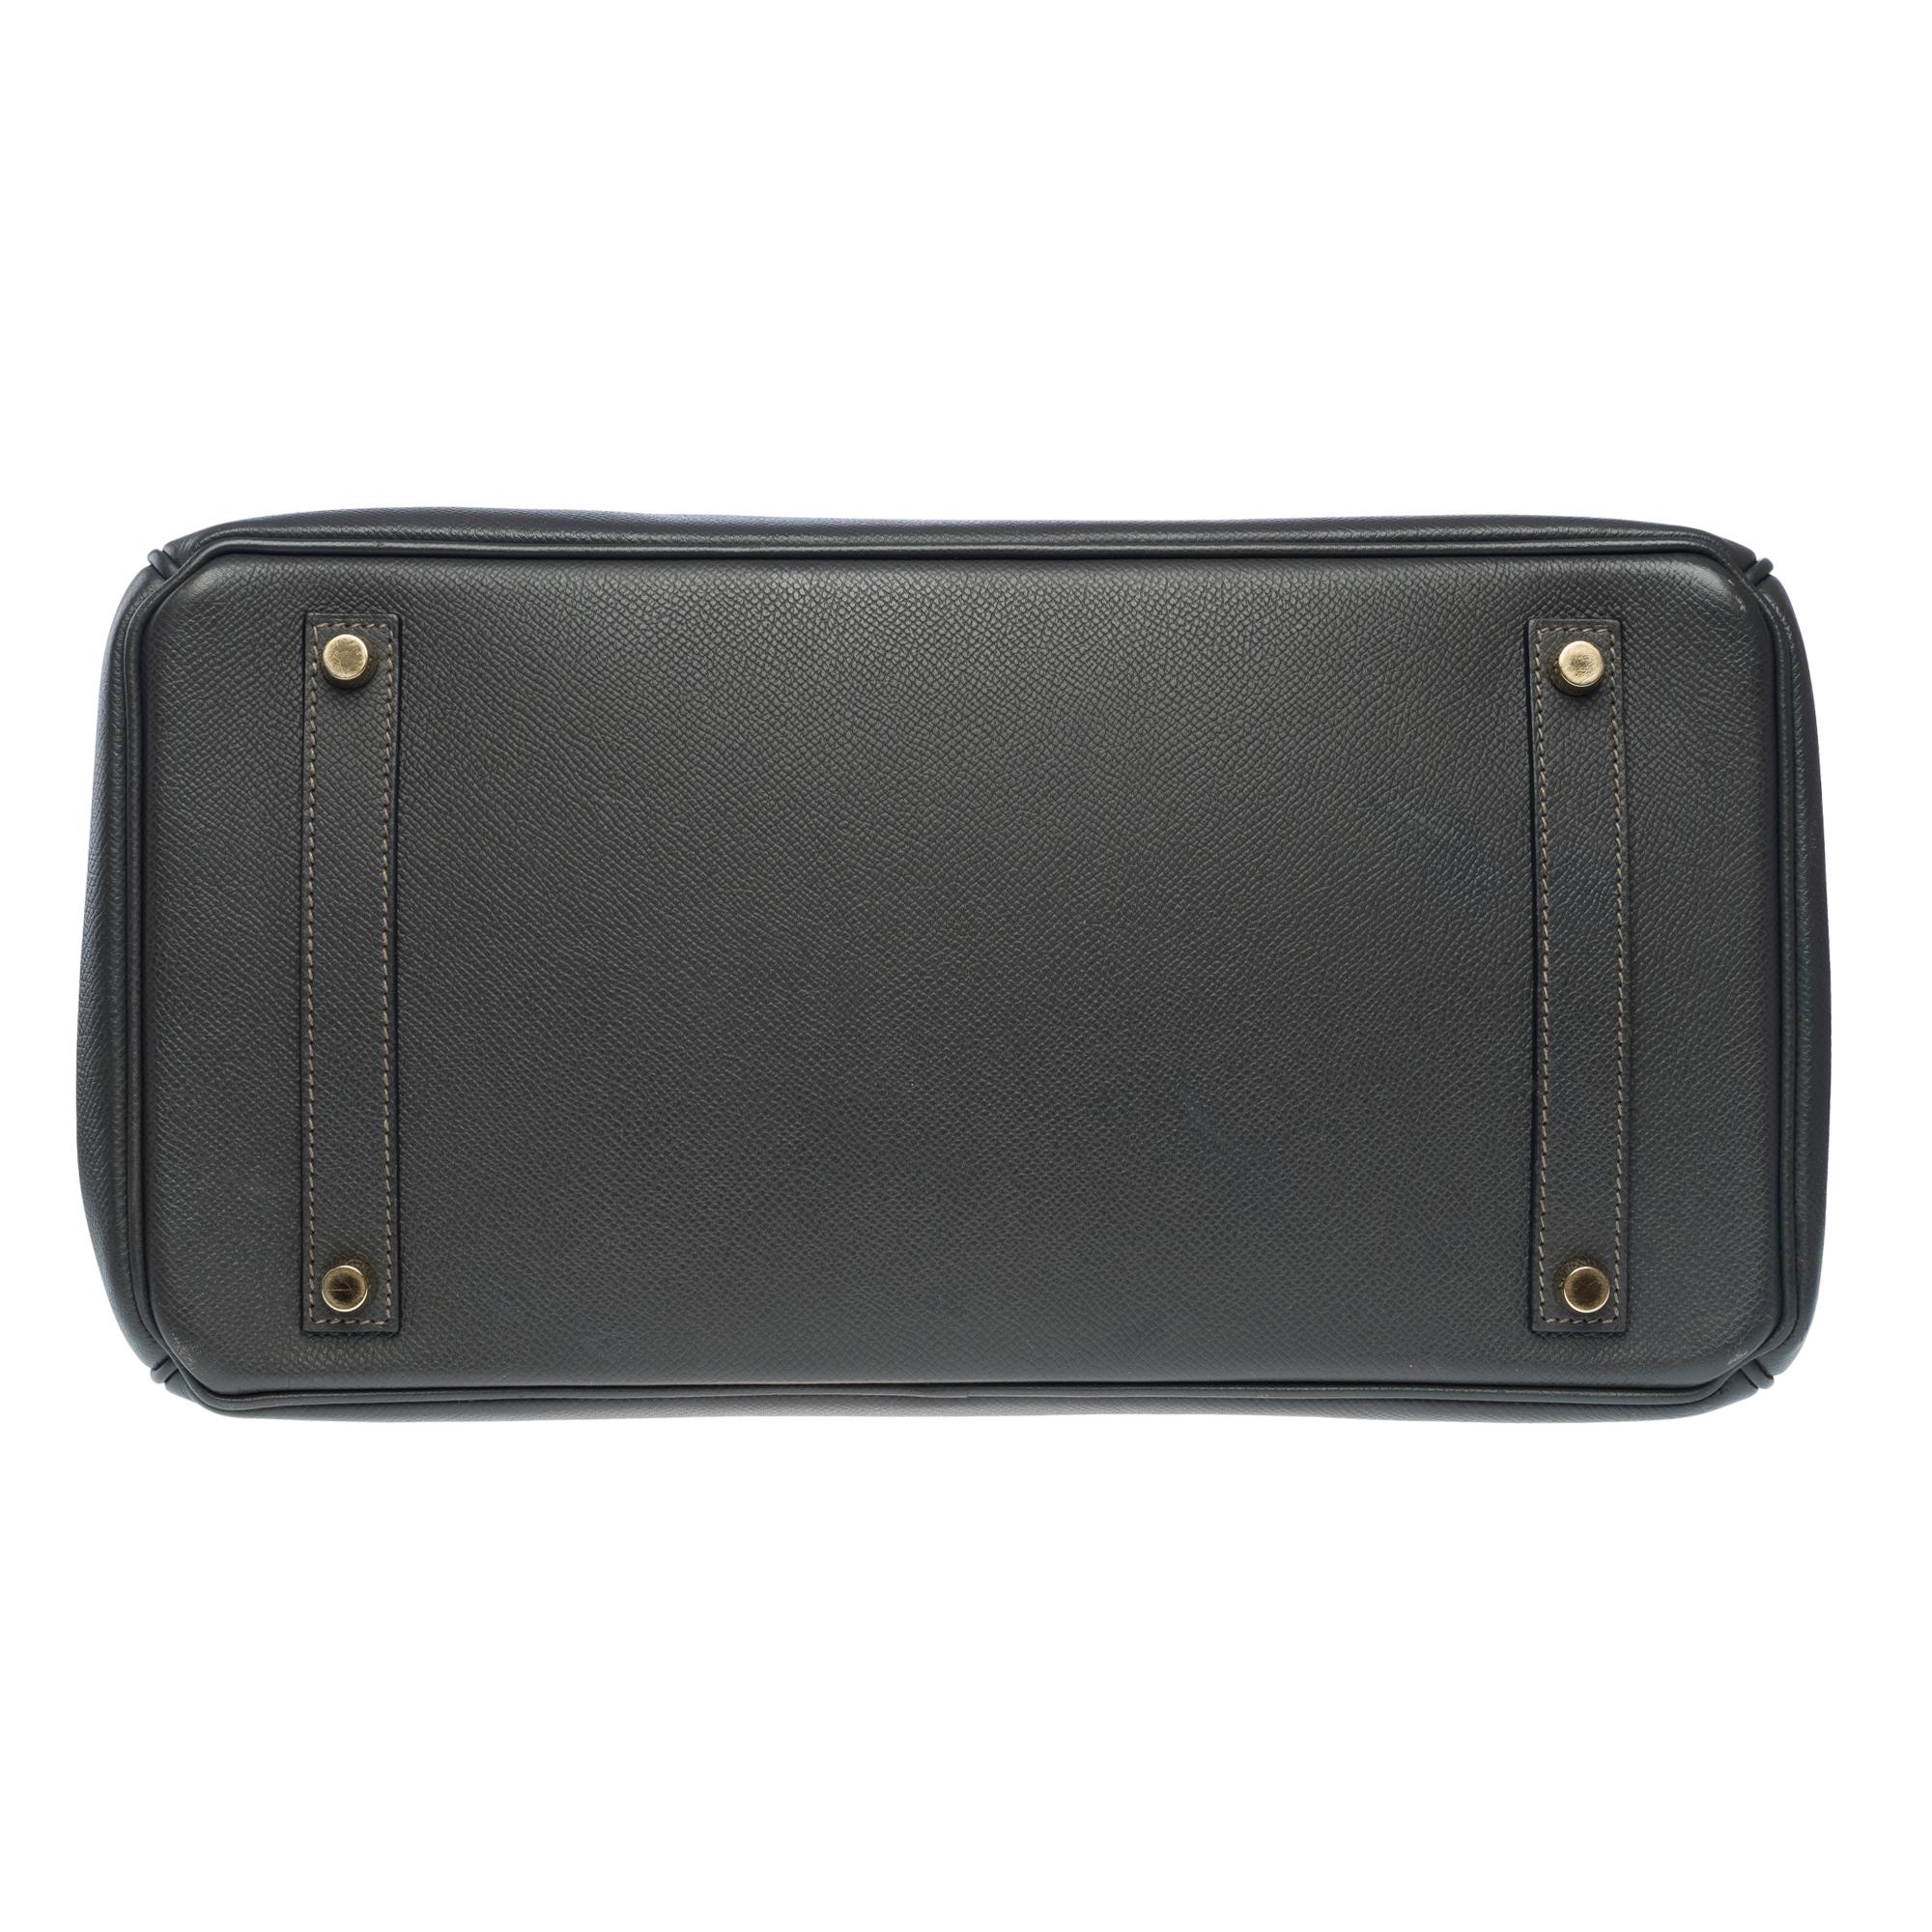 Amazing Hermès Birkin 35 handbag in Gray Graphite Epsom leather, GHW For Sale 7